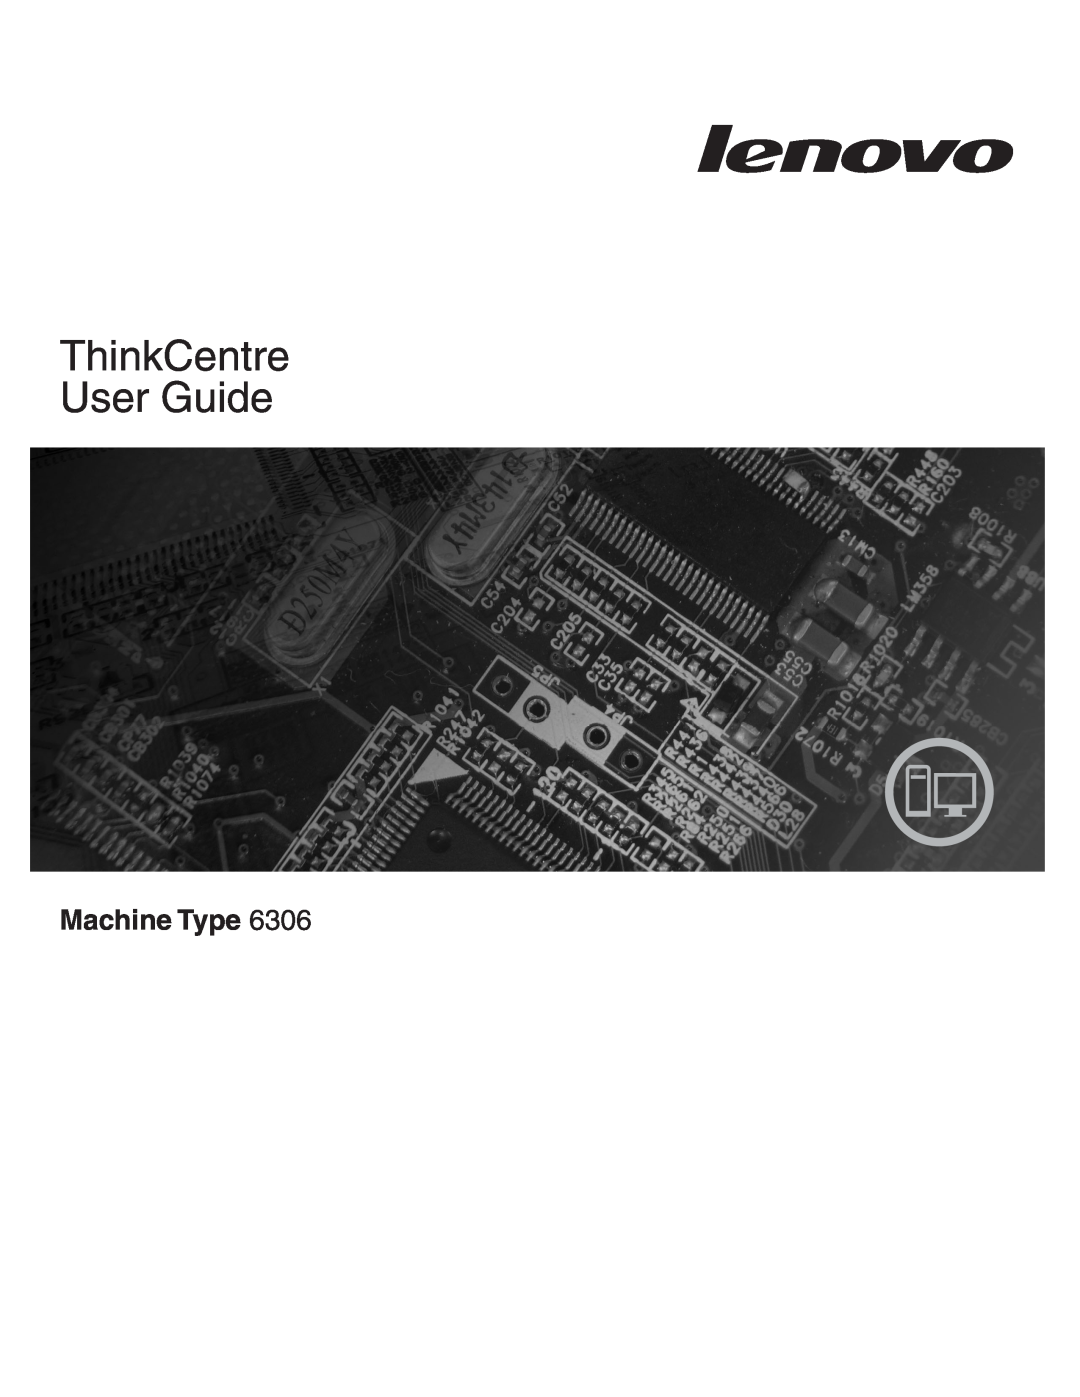 Lenovo 6306 manual Machine Type, ThinkCentre User Guide 